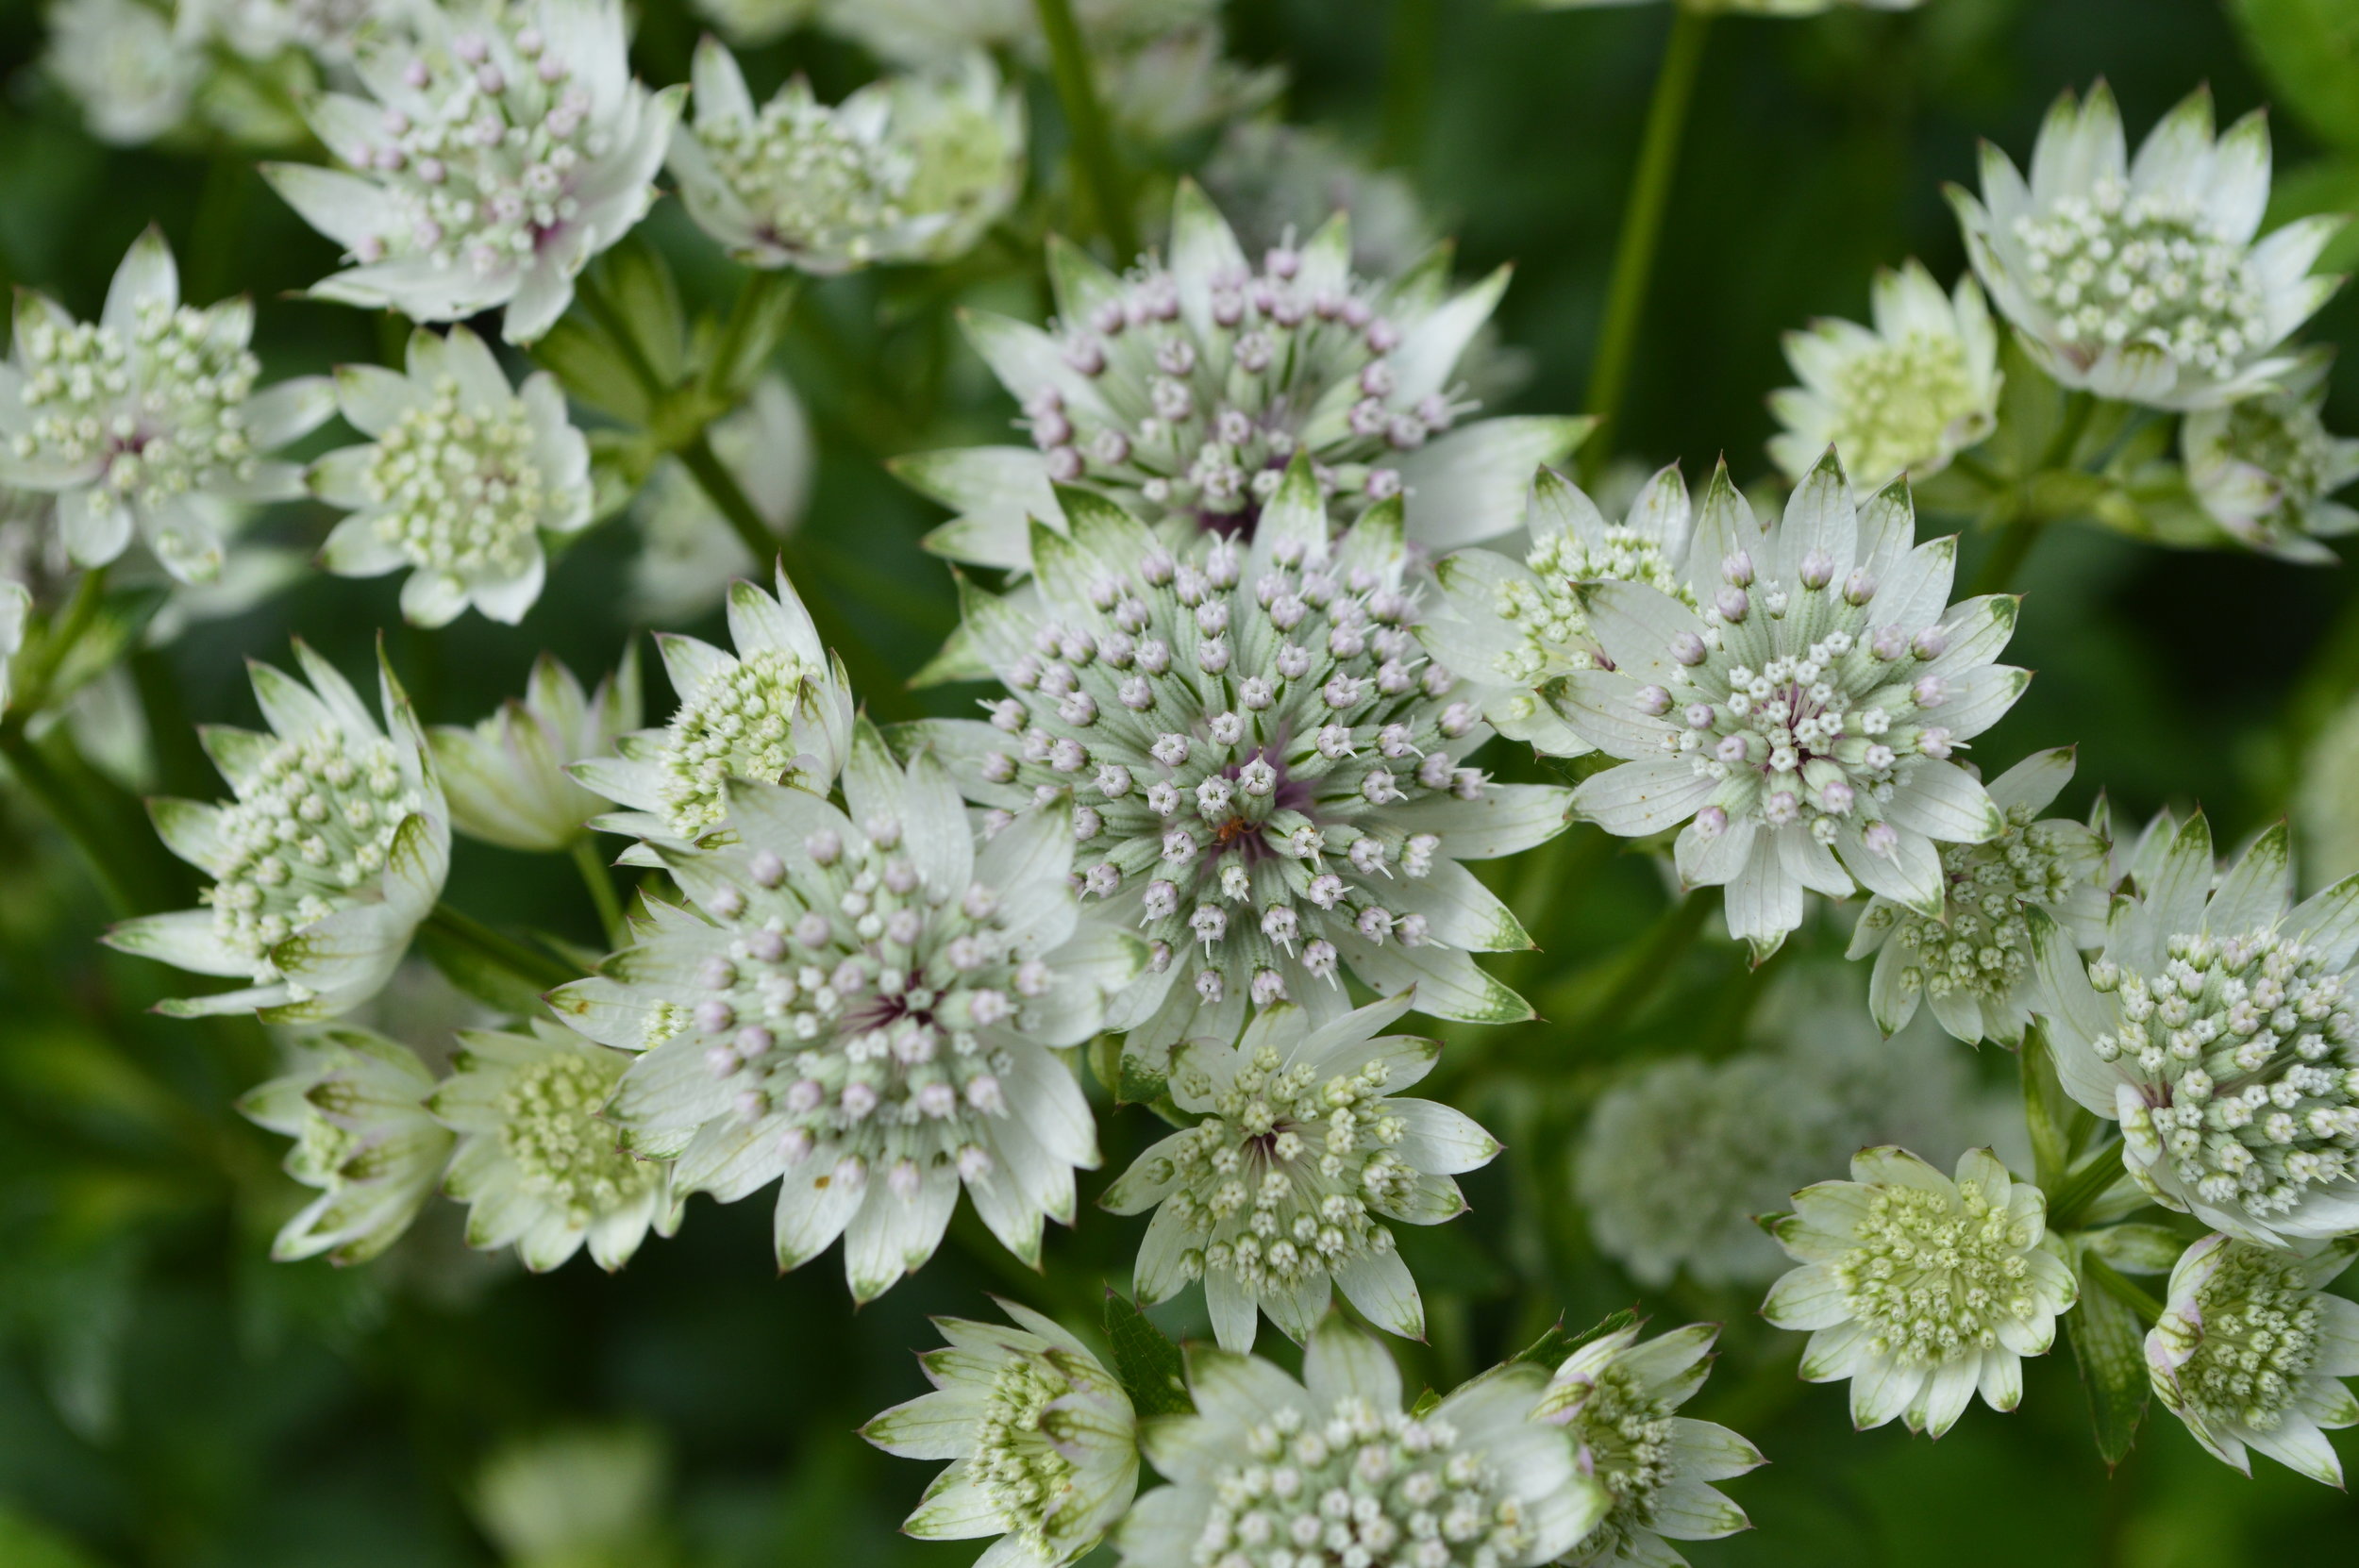 White - astrantia flowers need appreciating up close